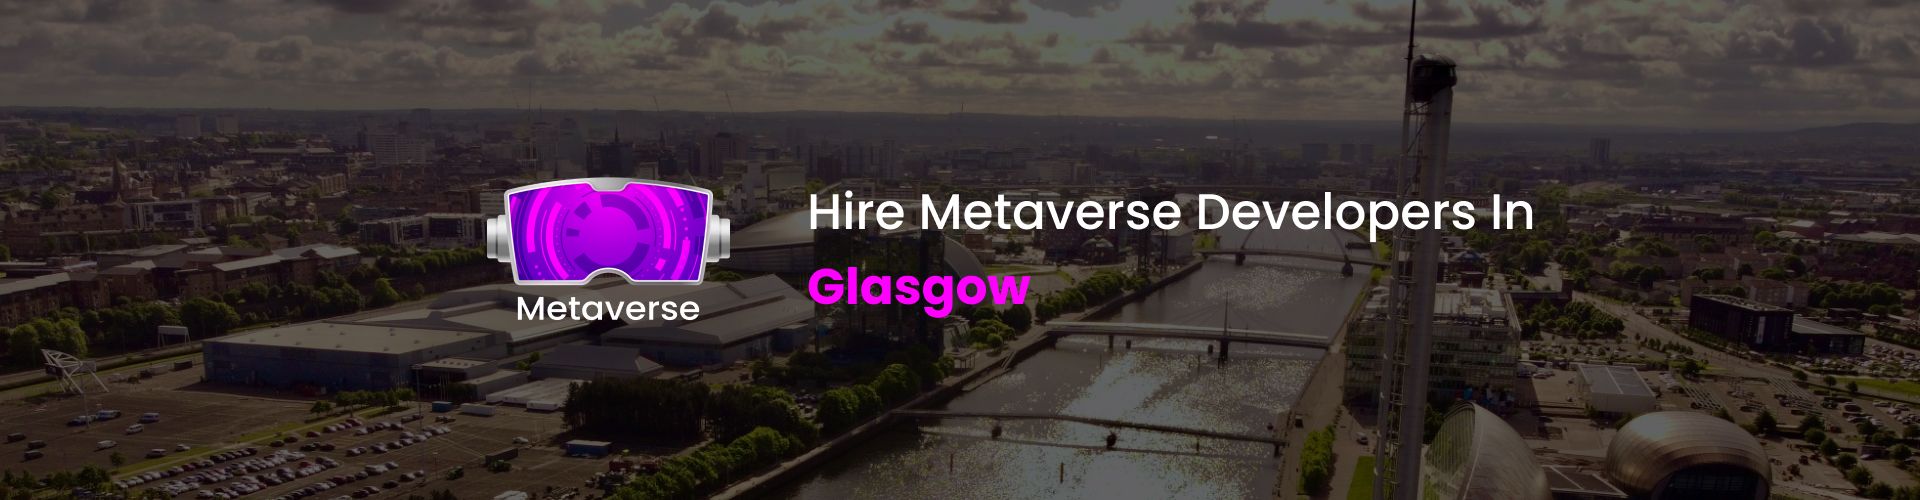 hire metaverse developers glasgow